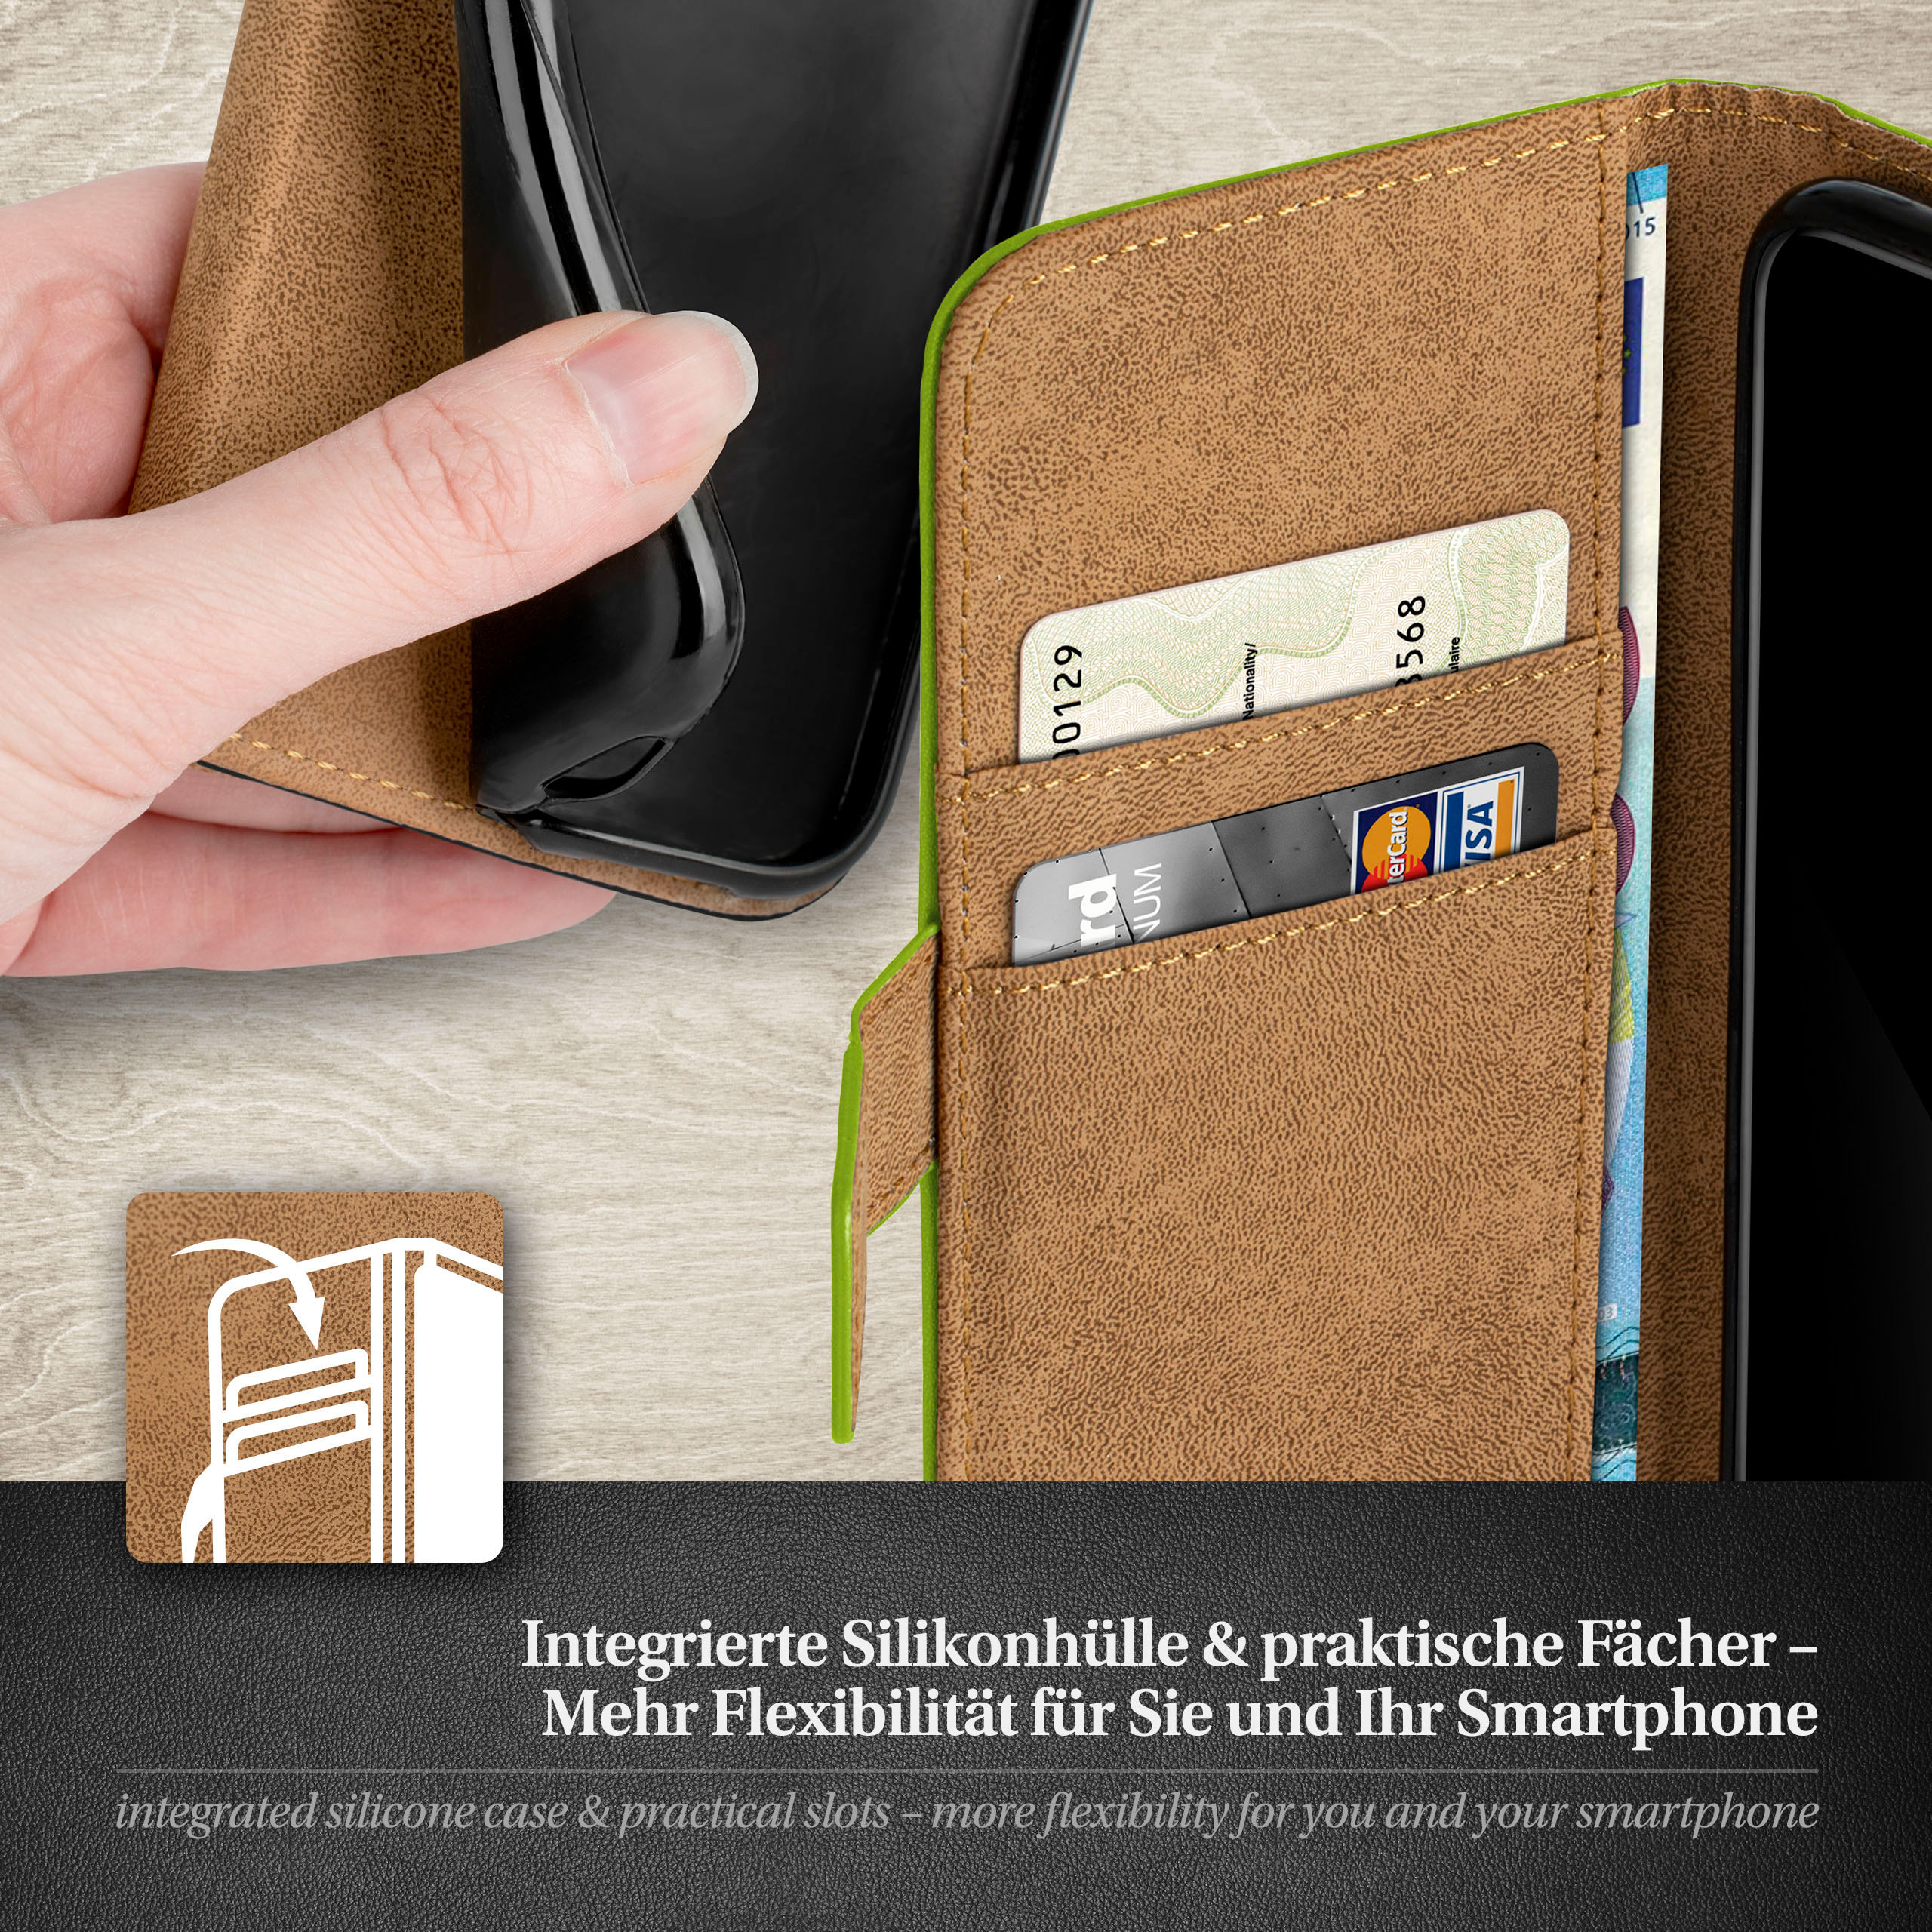 S5 MOEX Case, Book Mini, Samsung, Lime-Green Bookcover, Galaxy